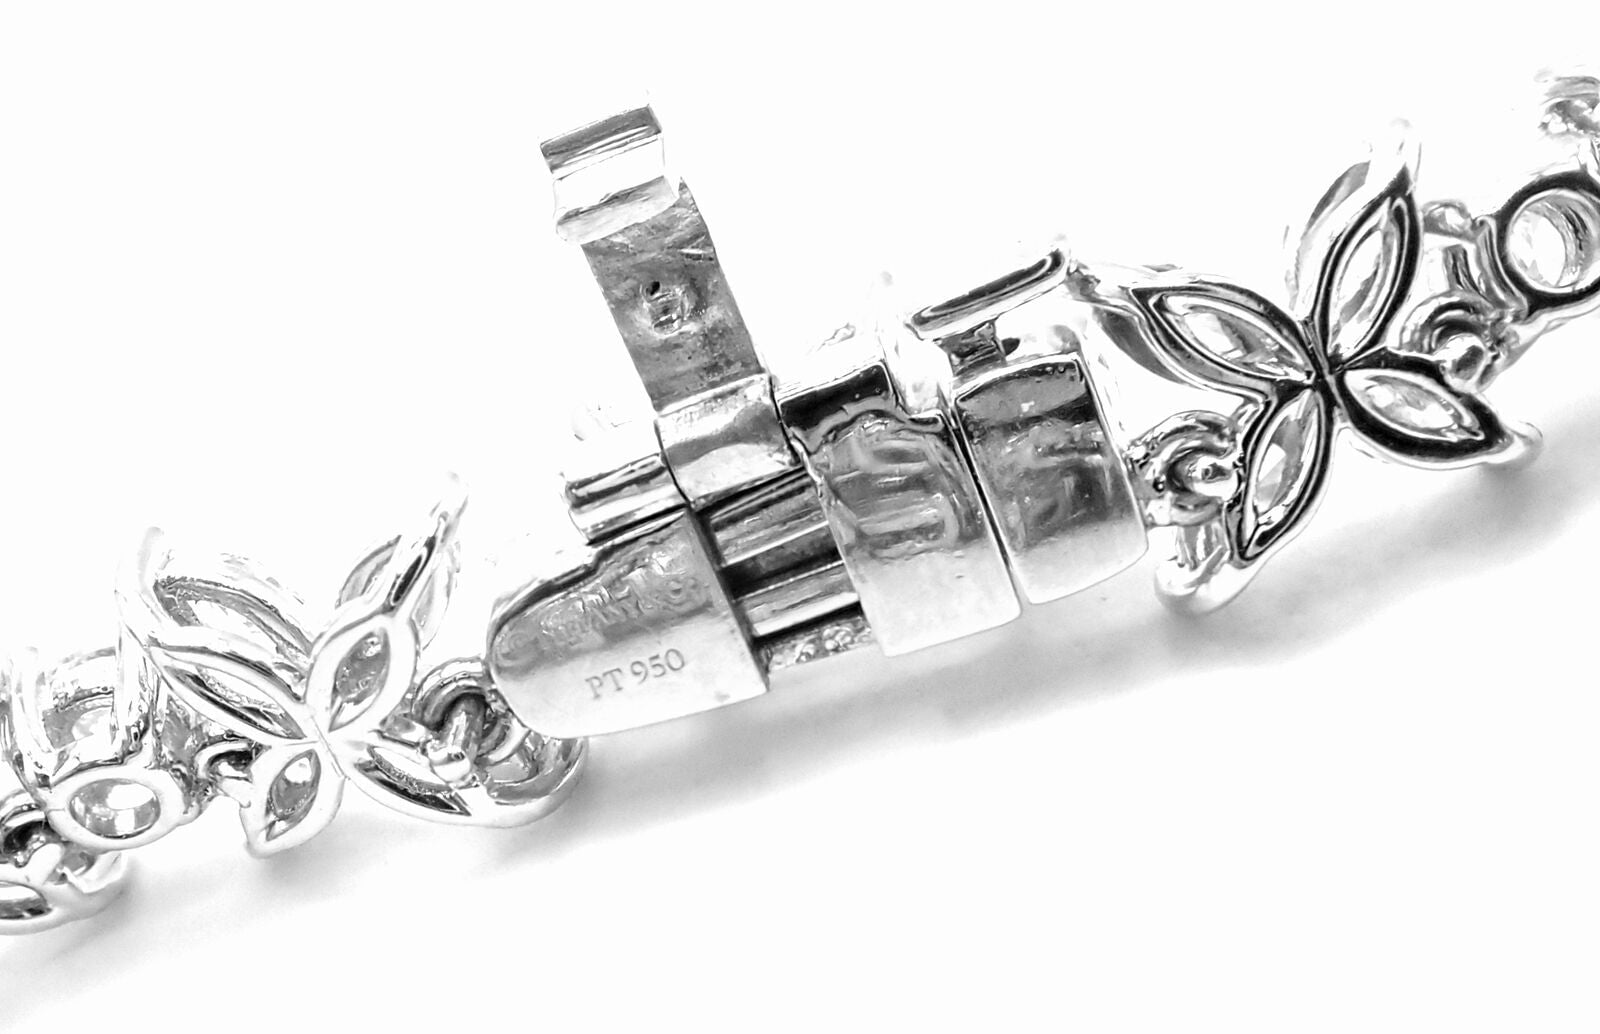 Tiffany & Co. Jewelry & Watches:Fine Jewelry:Necklaces & Pendants Authentic! Tiffany & Co Victoria Platinum Diamond Alternating Graduated Necklace